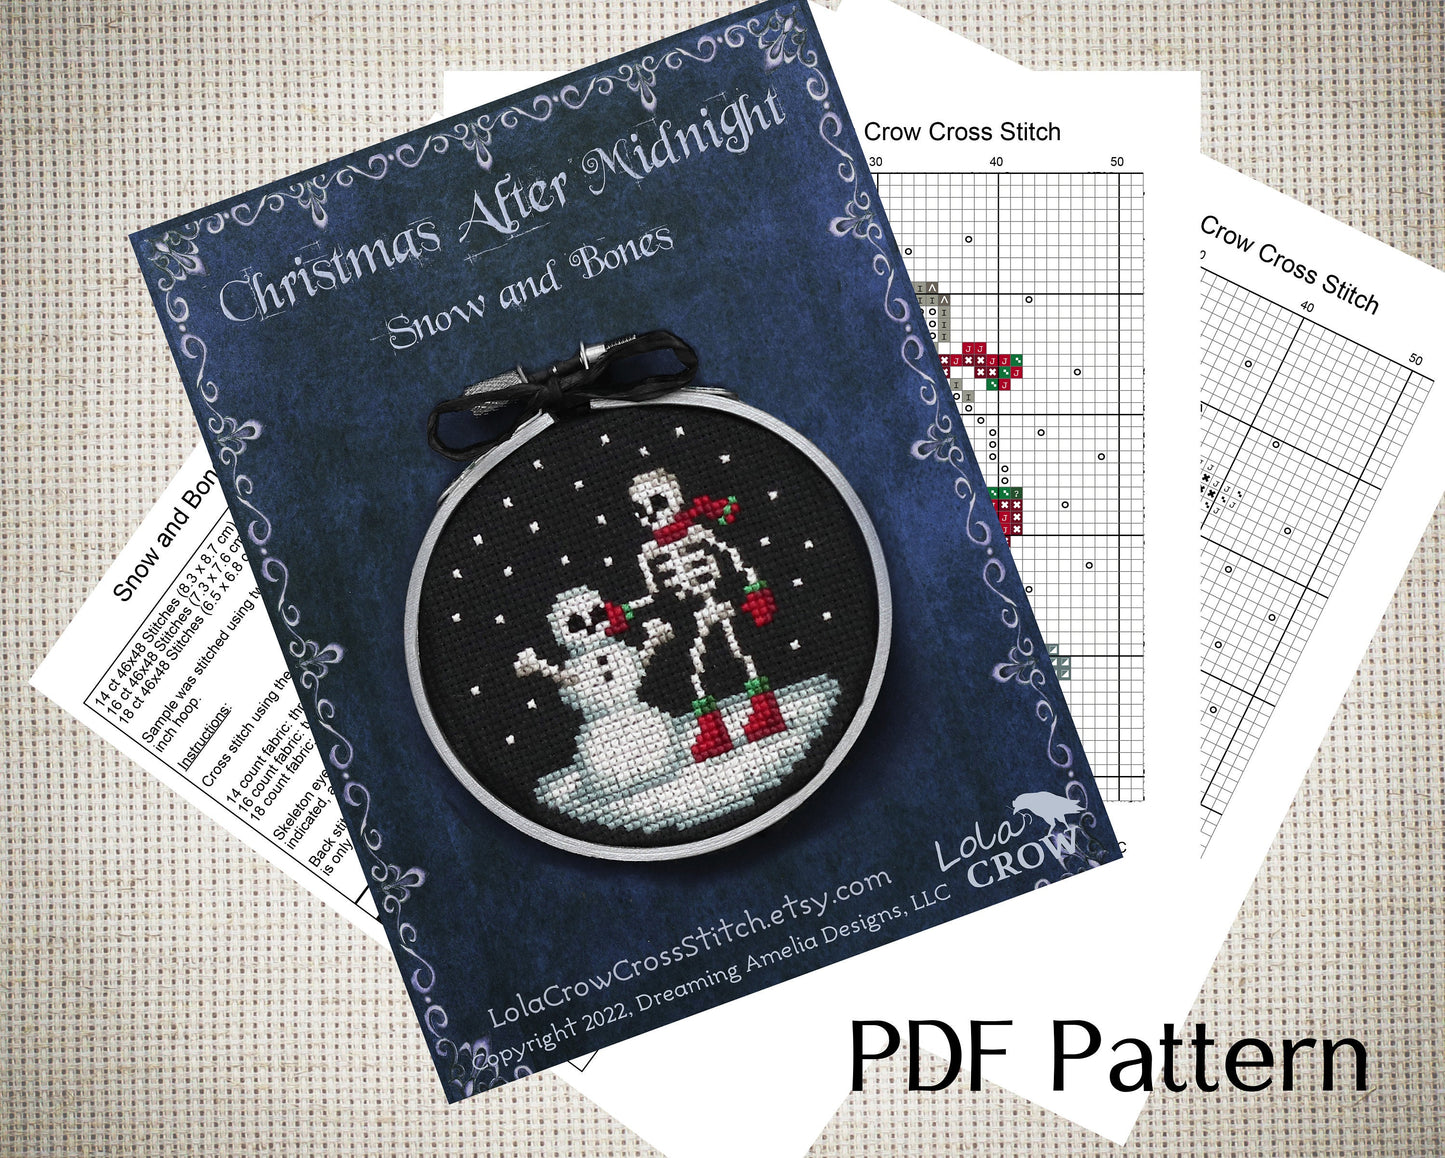 Snow and Bones - Digital PDF Cross Stitch Pattern